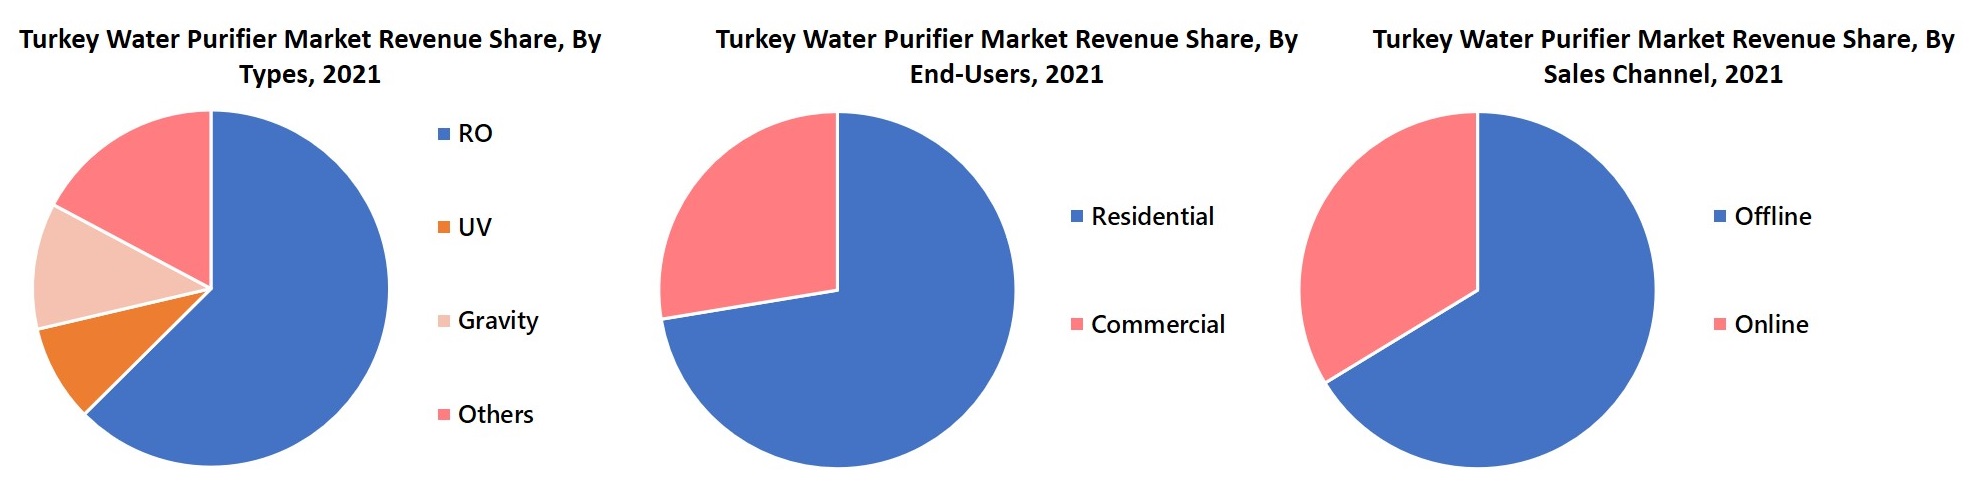 Turkey Water Purifier Market Revenue Share